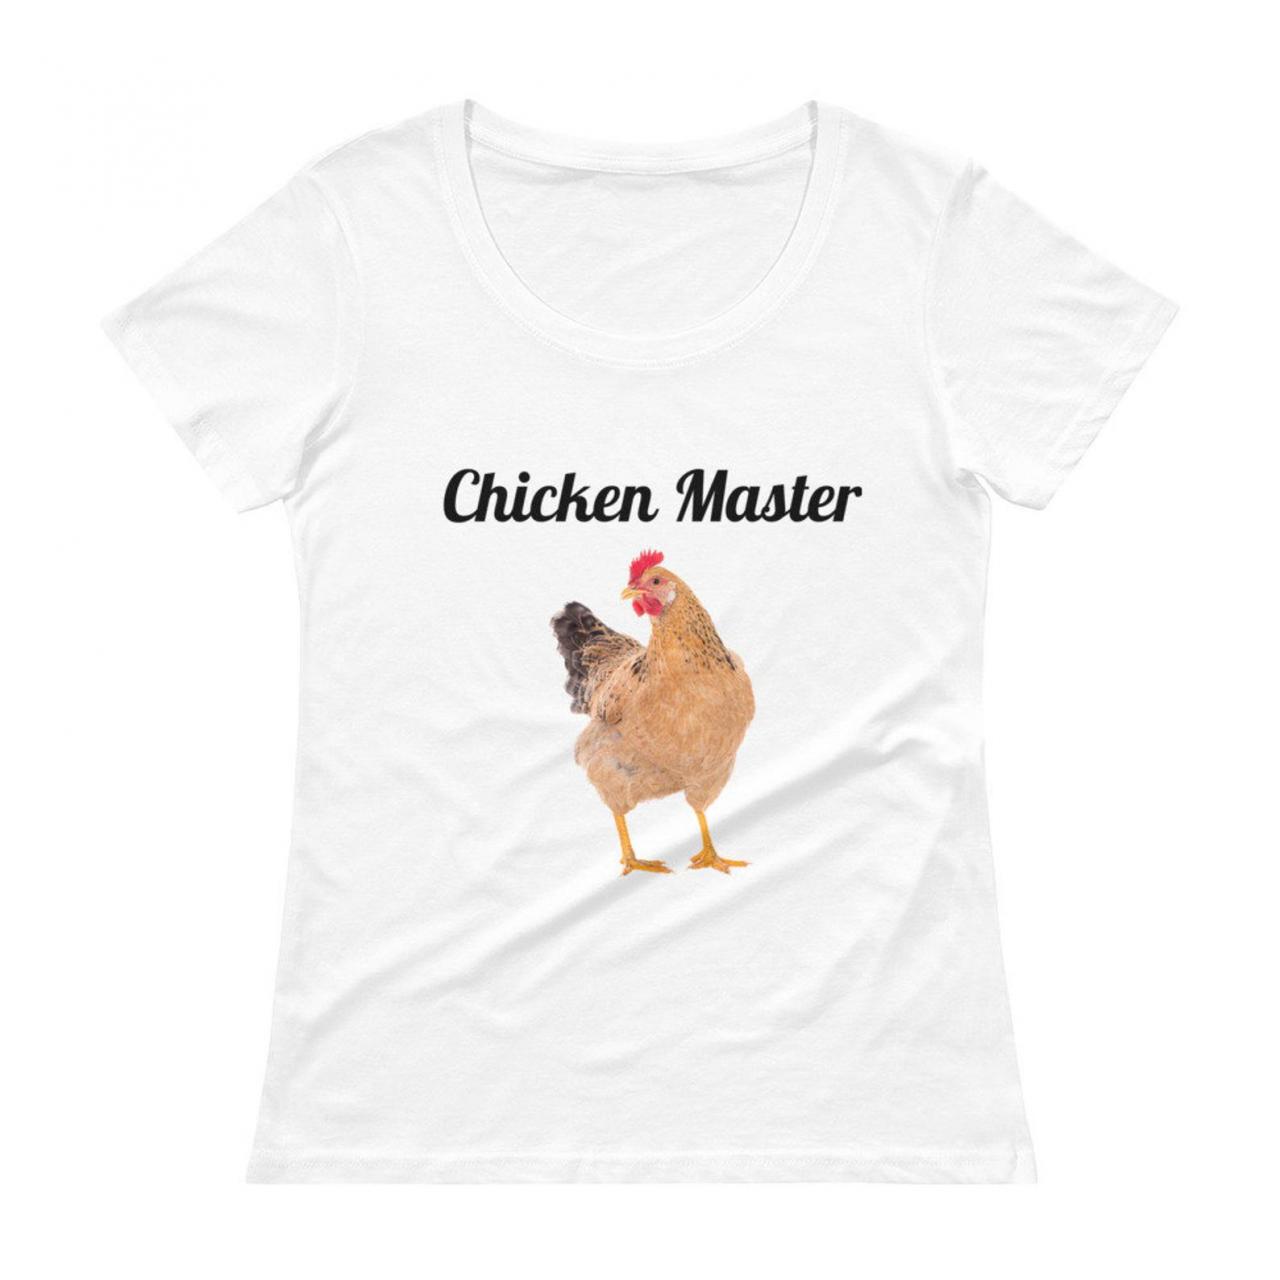 Chickens Shirt / Chicken Shirt / Women's Chicken Shirt / Chickens / Love Chickens / Chicken Love / Farm Life / Farm Life Ladies T Shirt